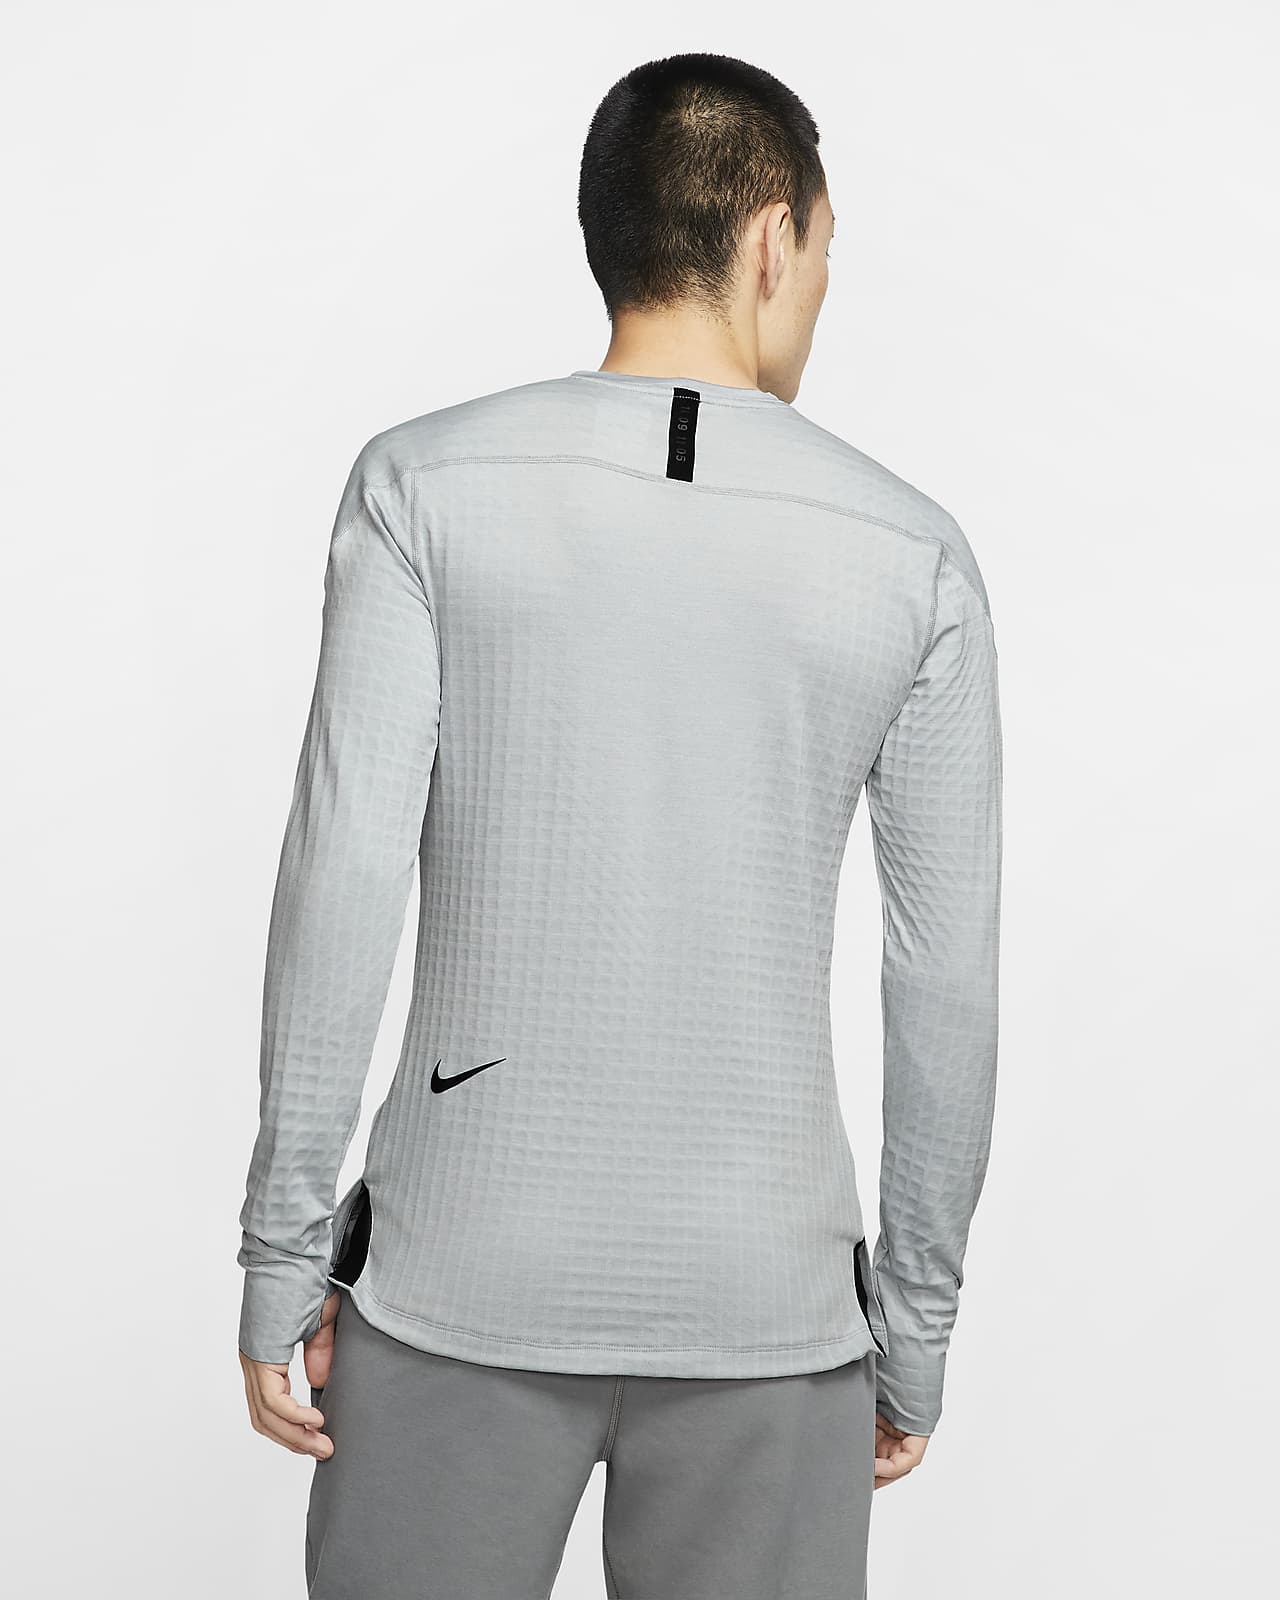 Nike Pro Tech Pack Men's Long-Sleeve Top. Nike SA